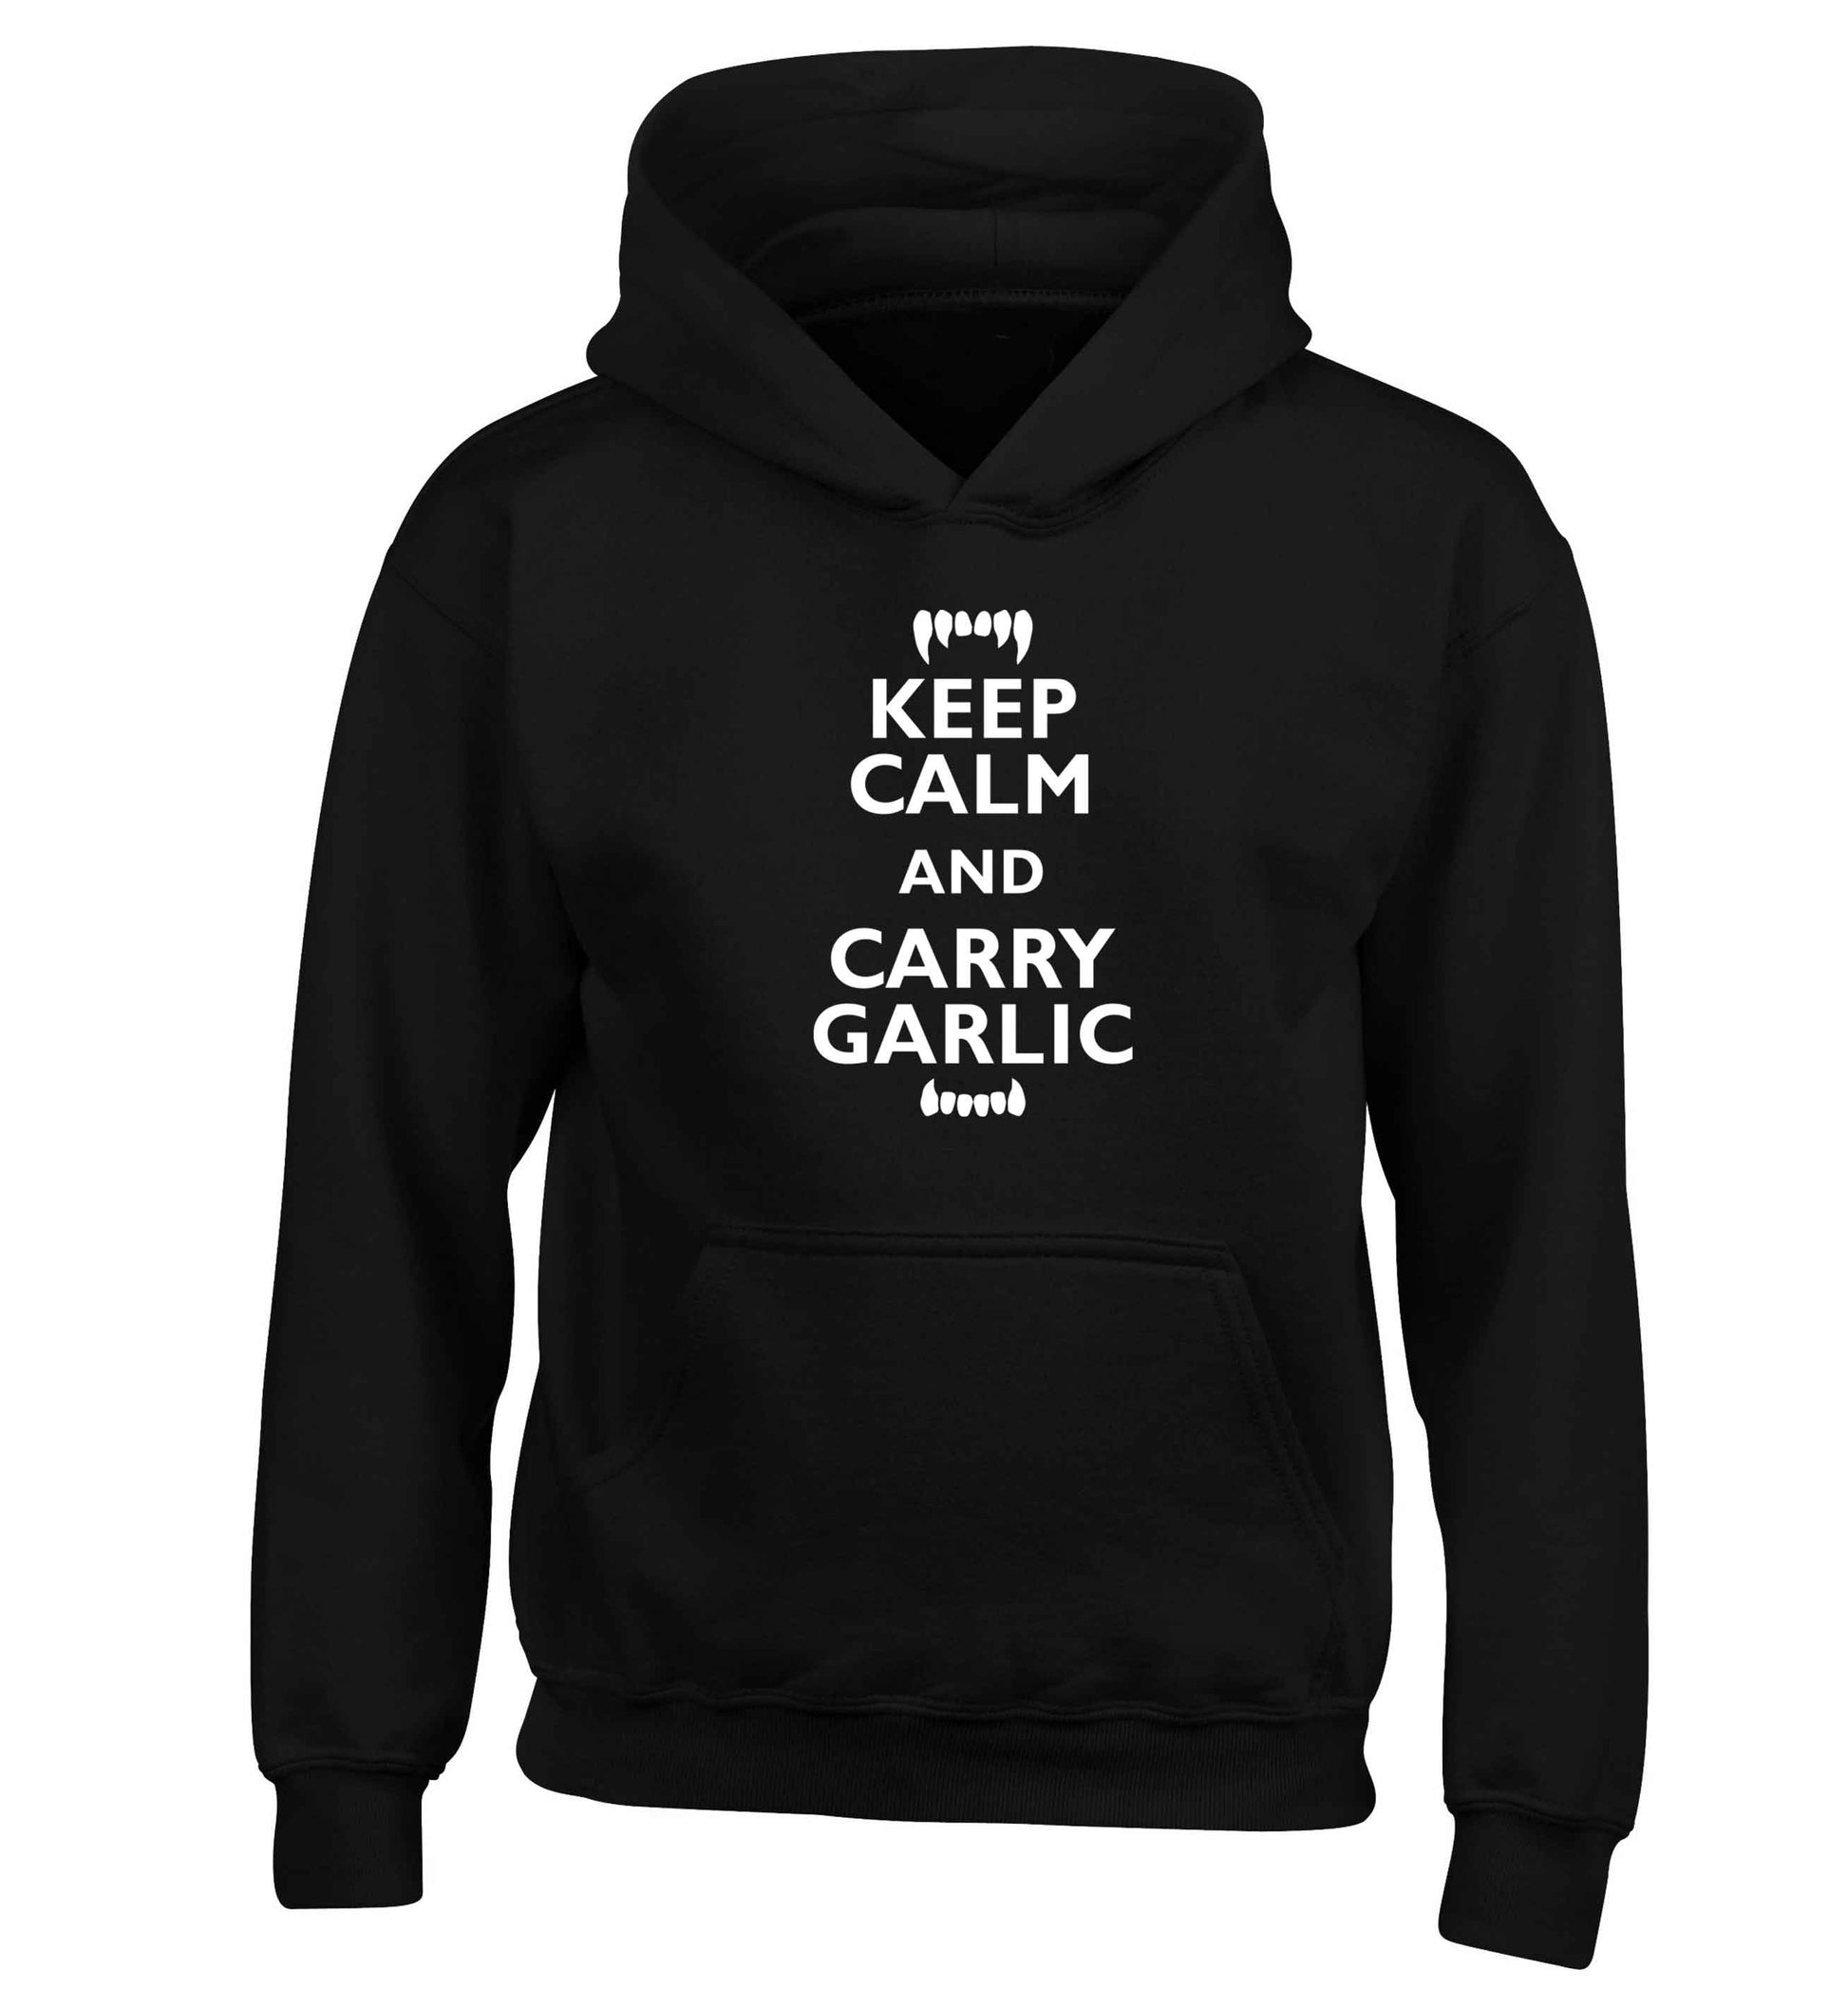 Keep calm and carry garlic children's black hoodie 12-13 Years